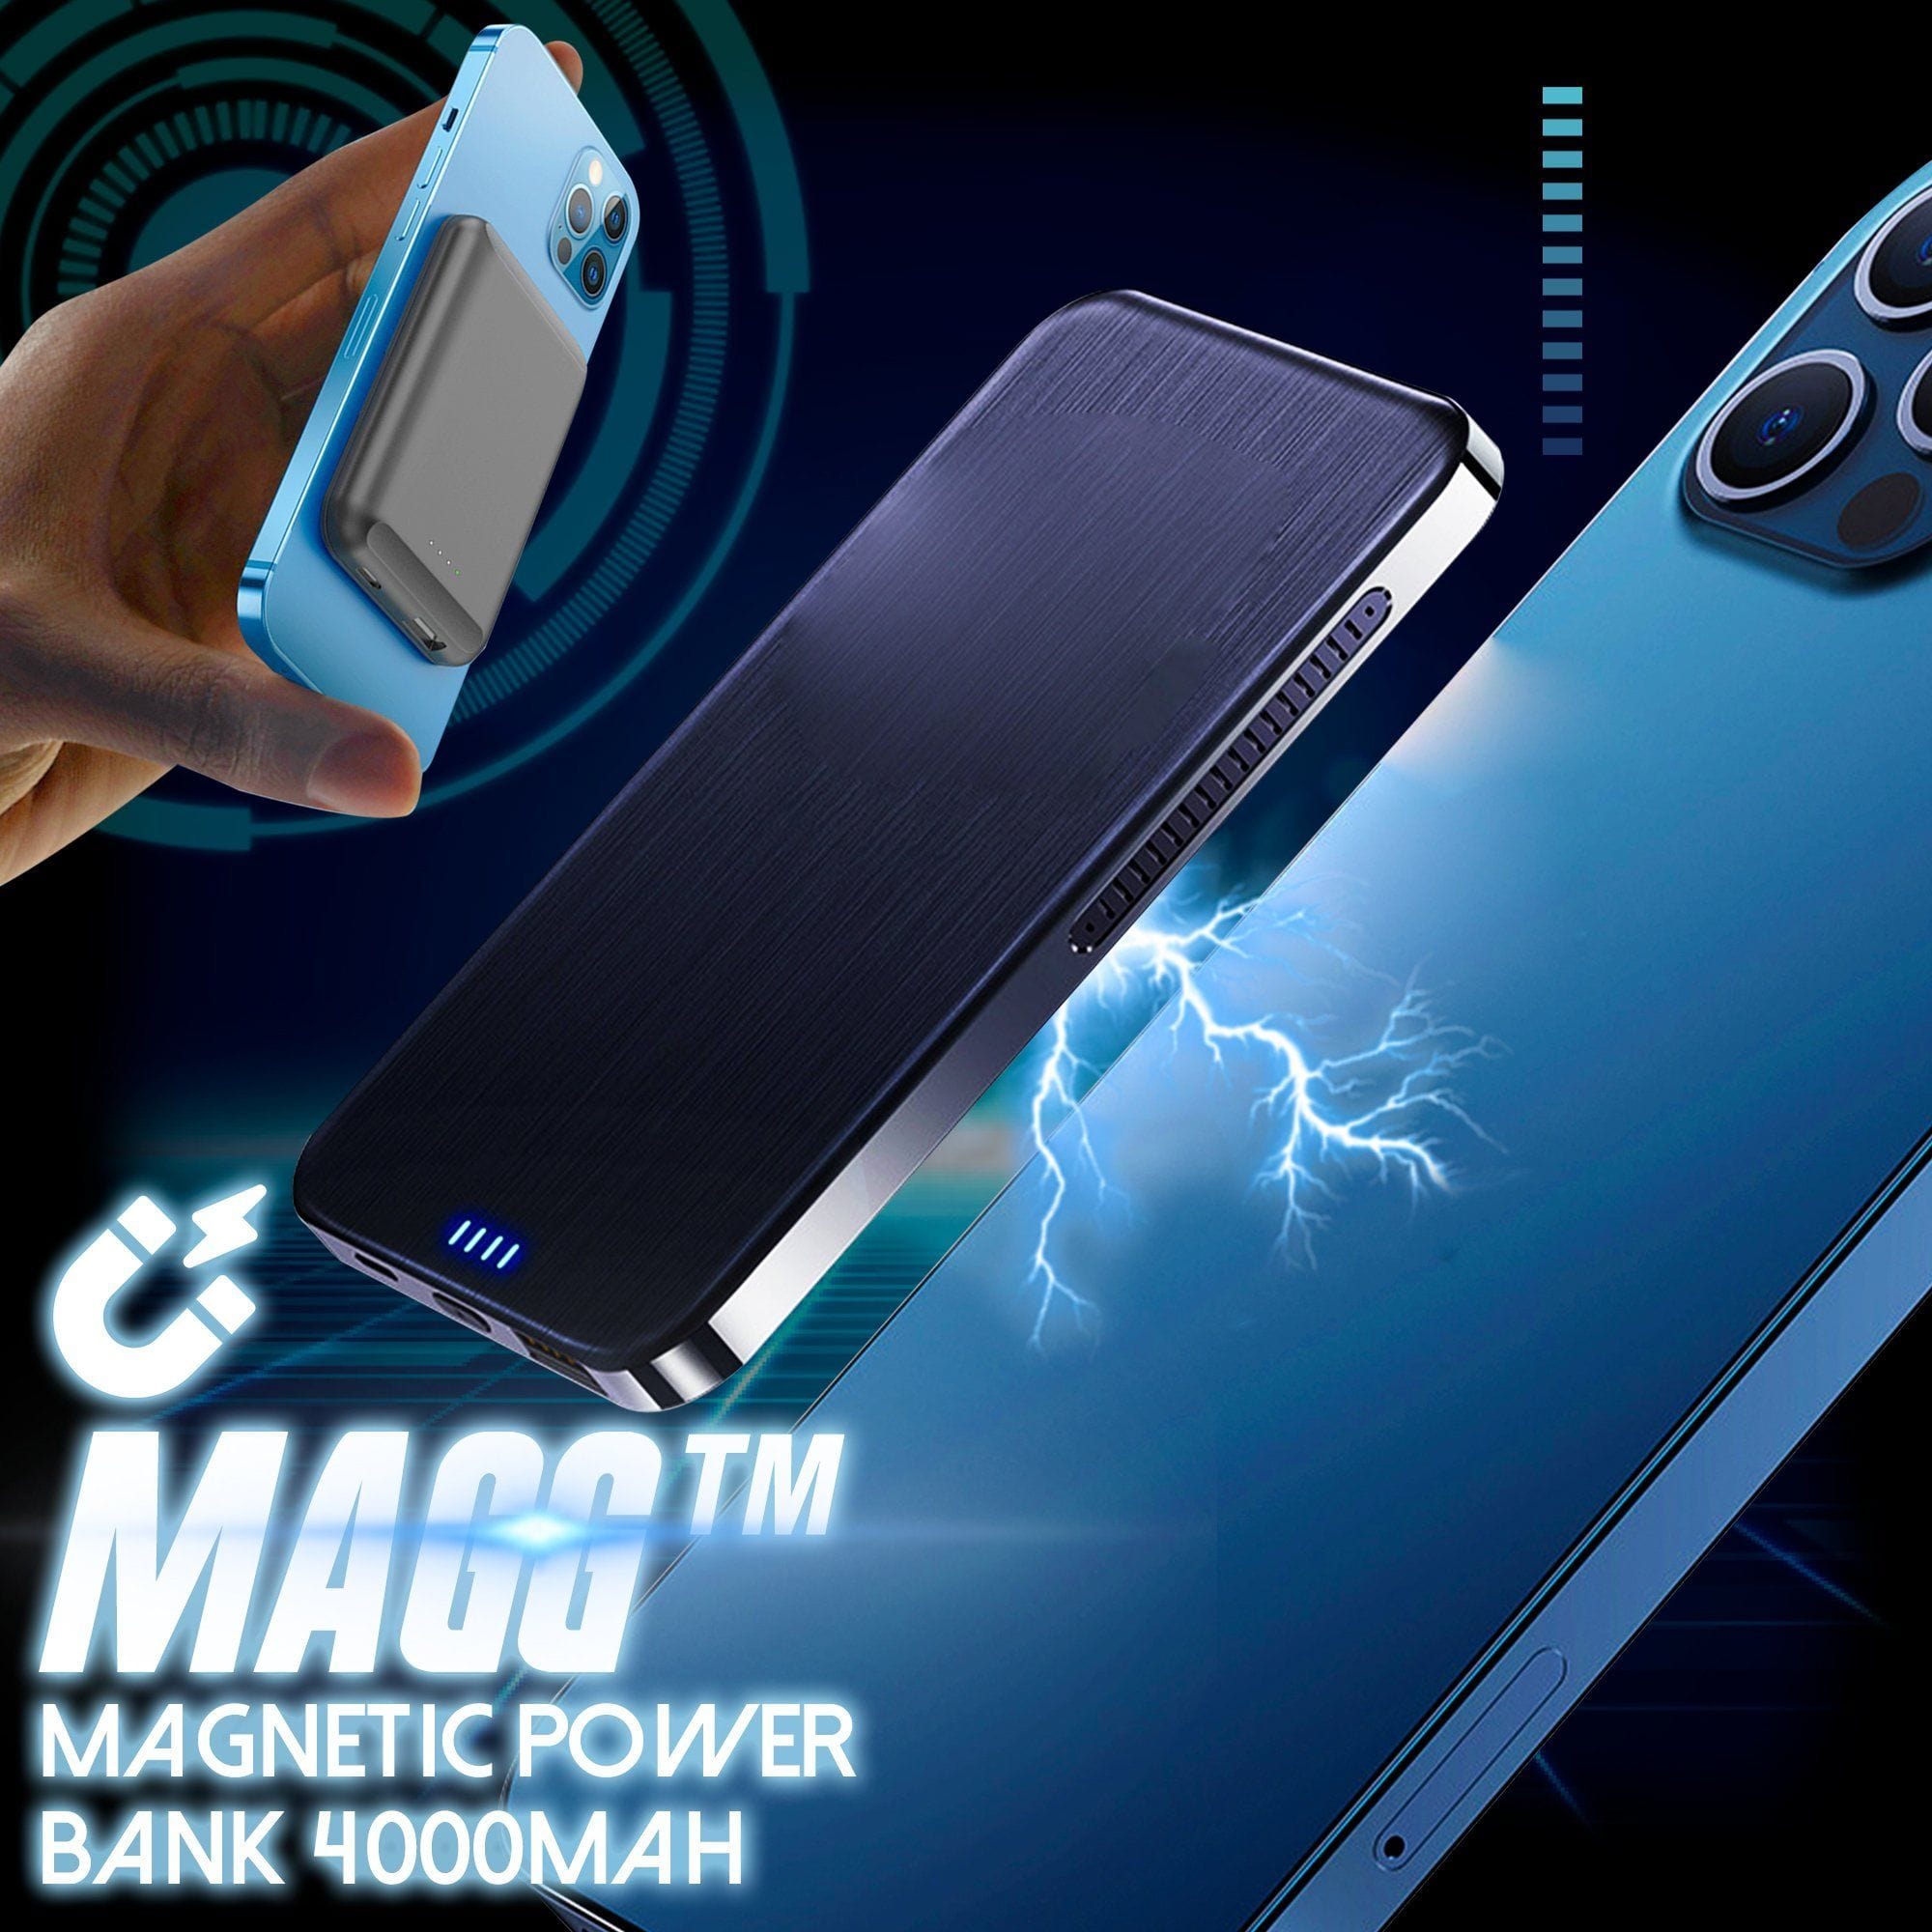 MAGG Wireless Magnetic Powerbank 4000mAh